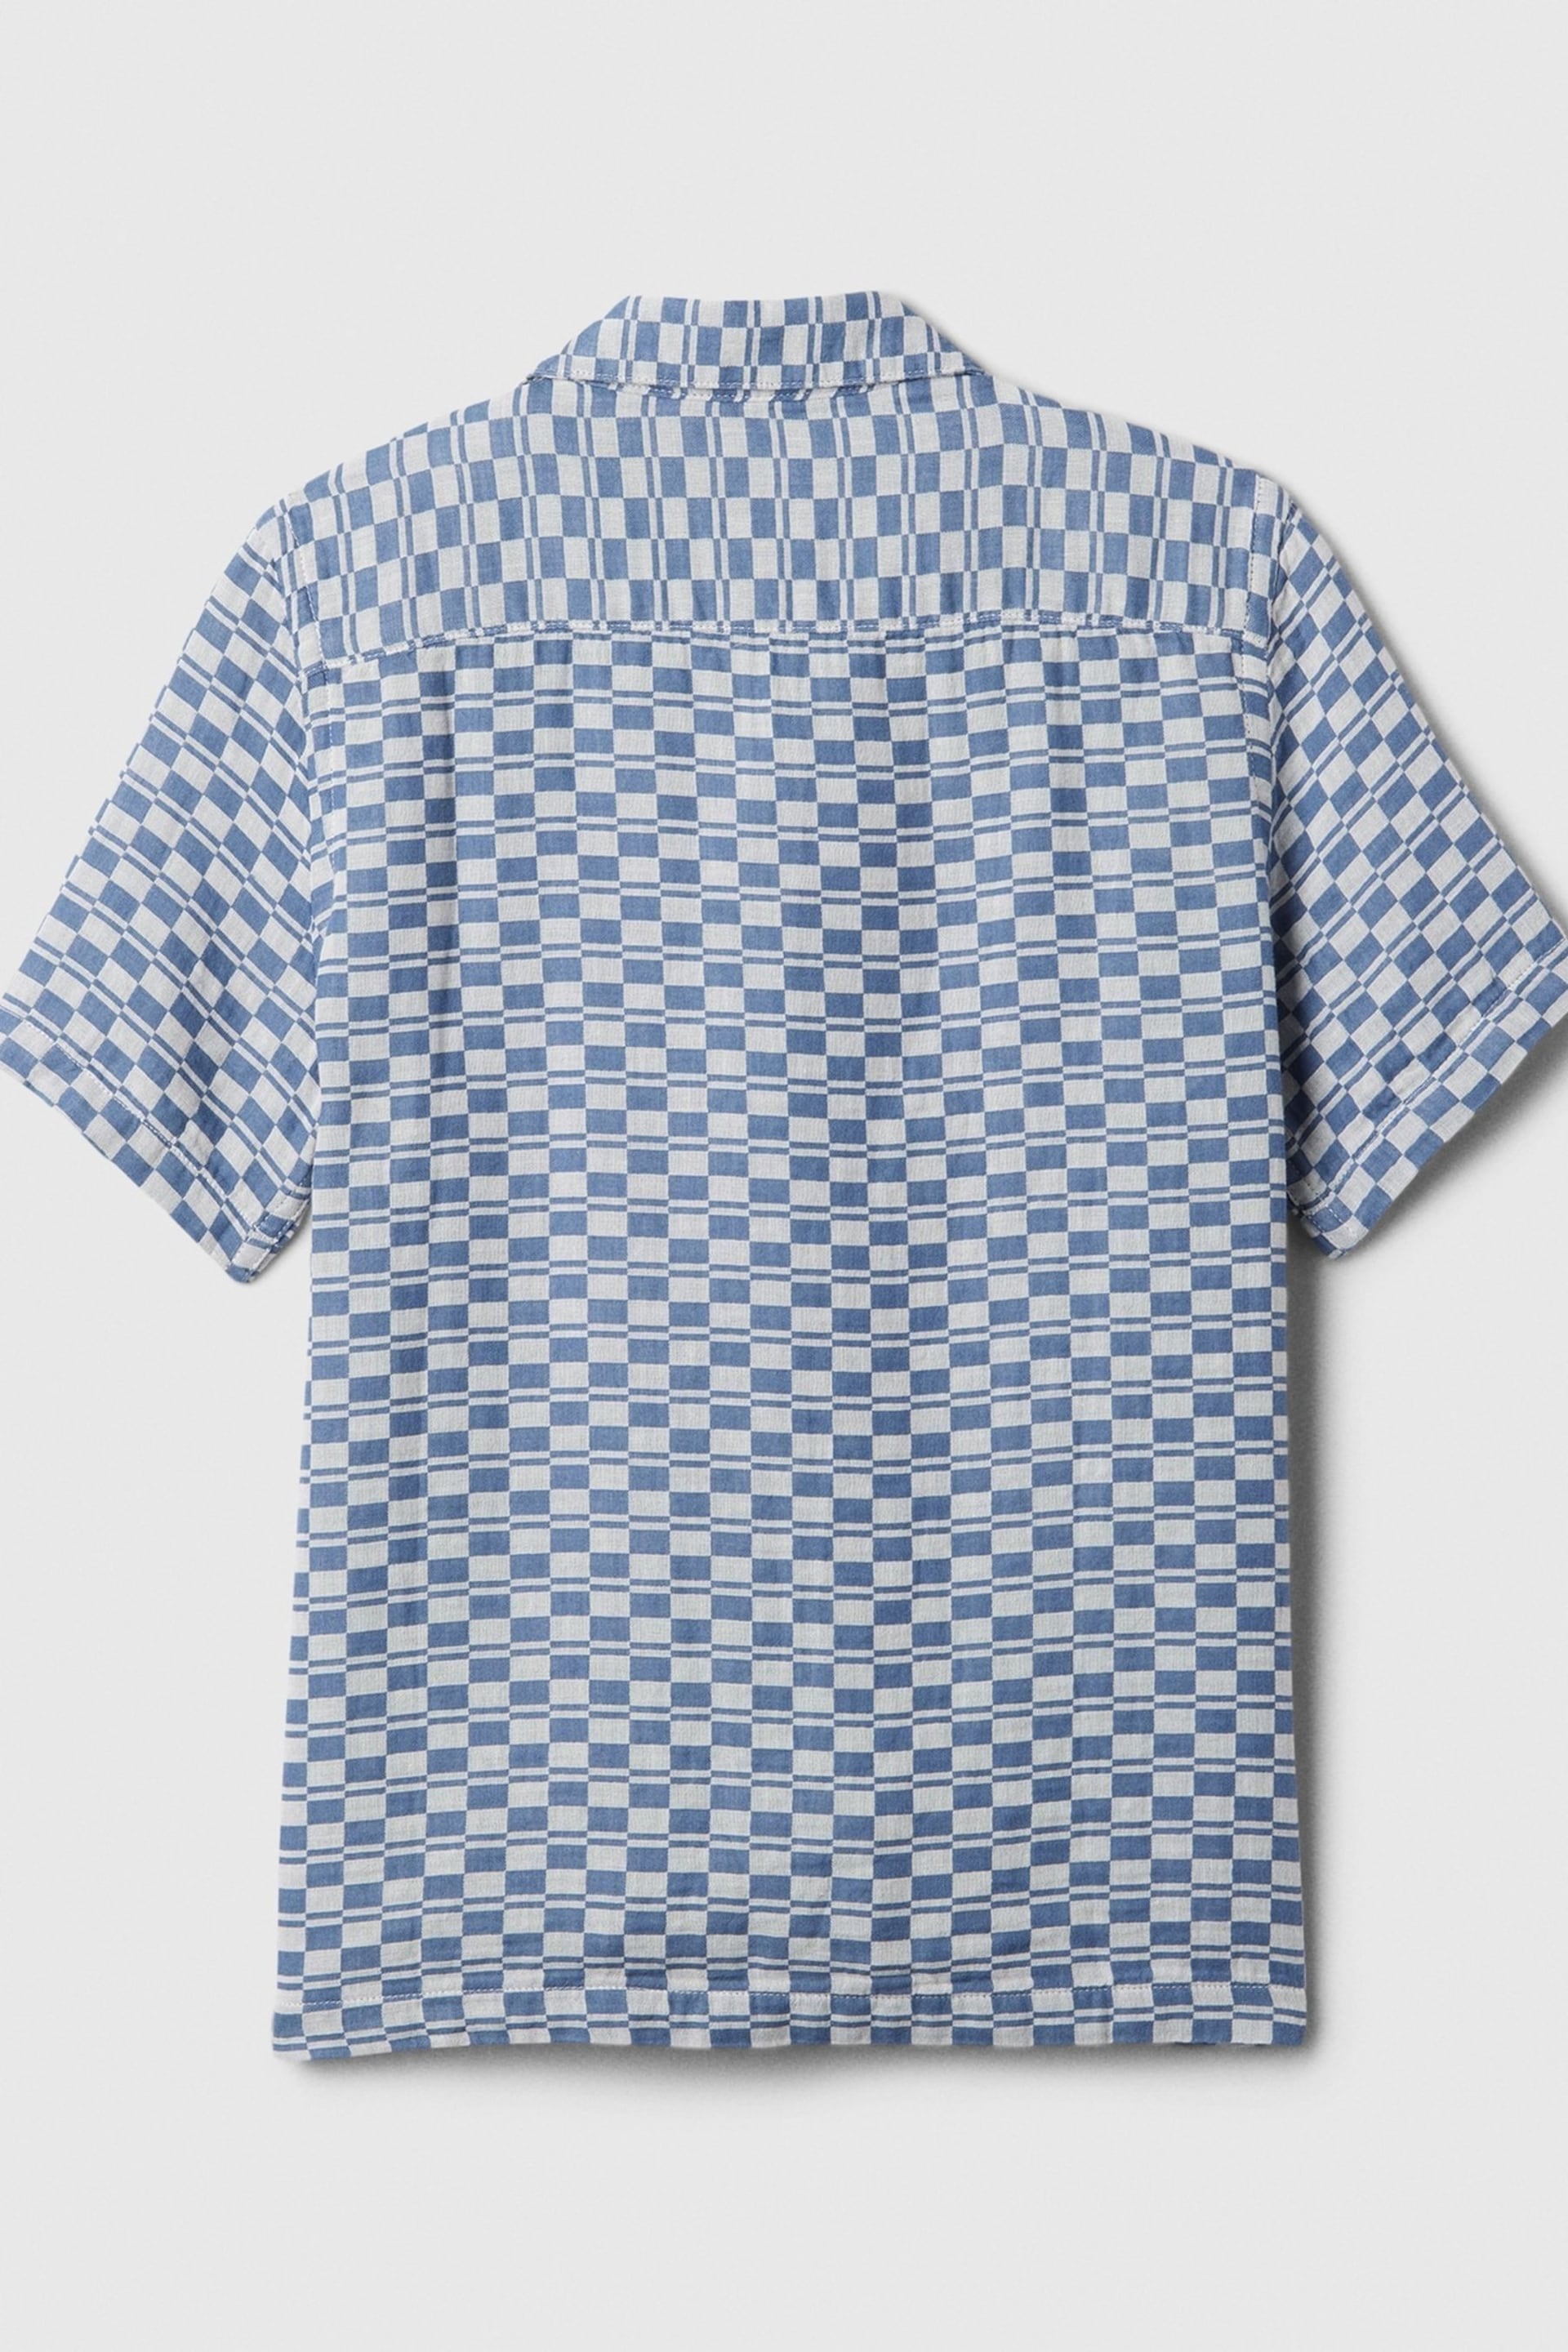 Gap Blue Crinkle Cotton Short Sleeve Shirt (4-13yrs) - Image 2 of 3